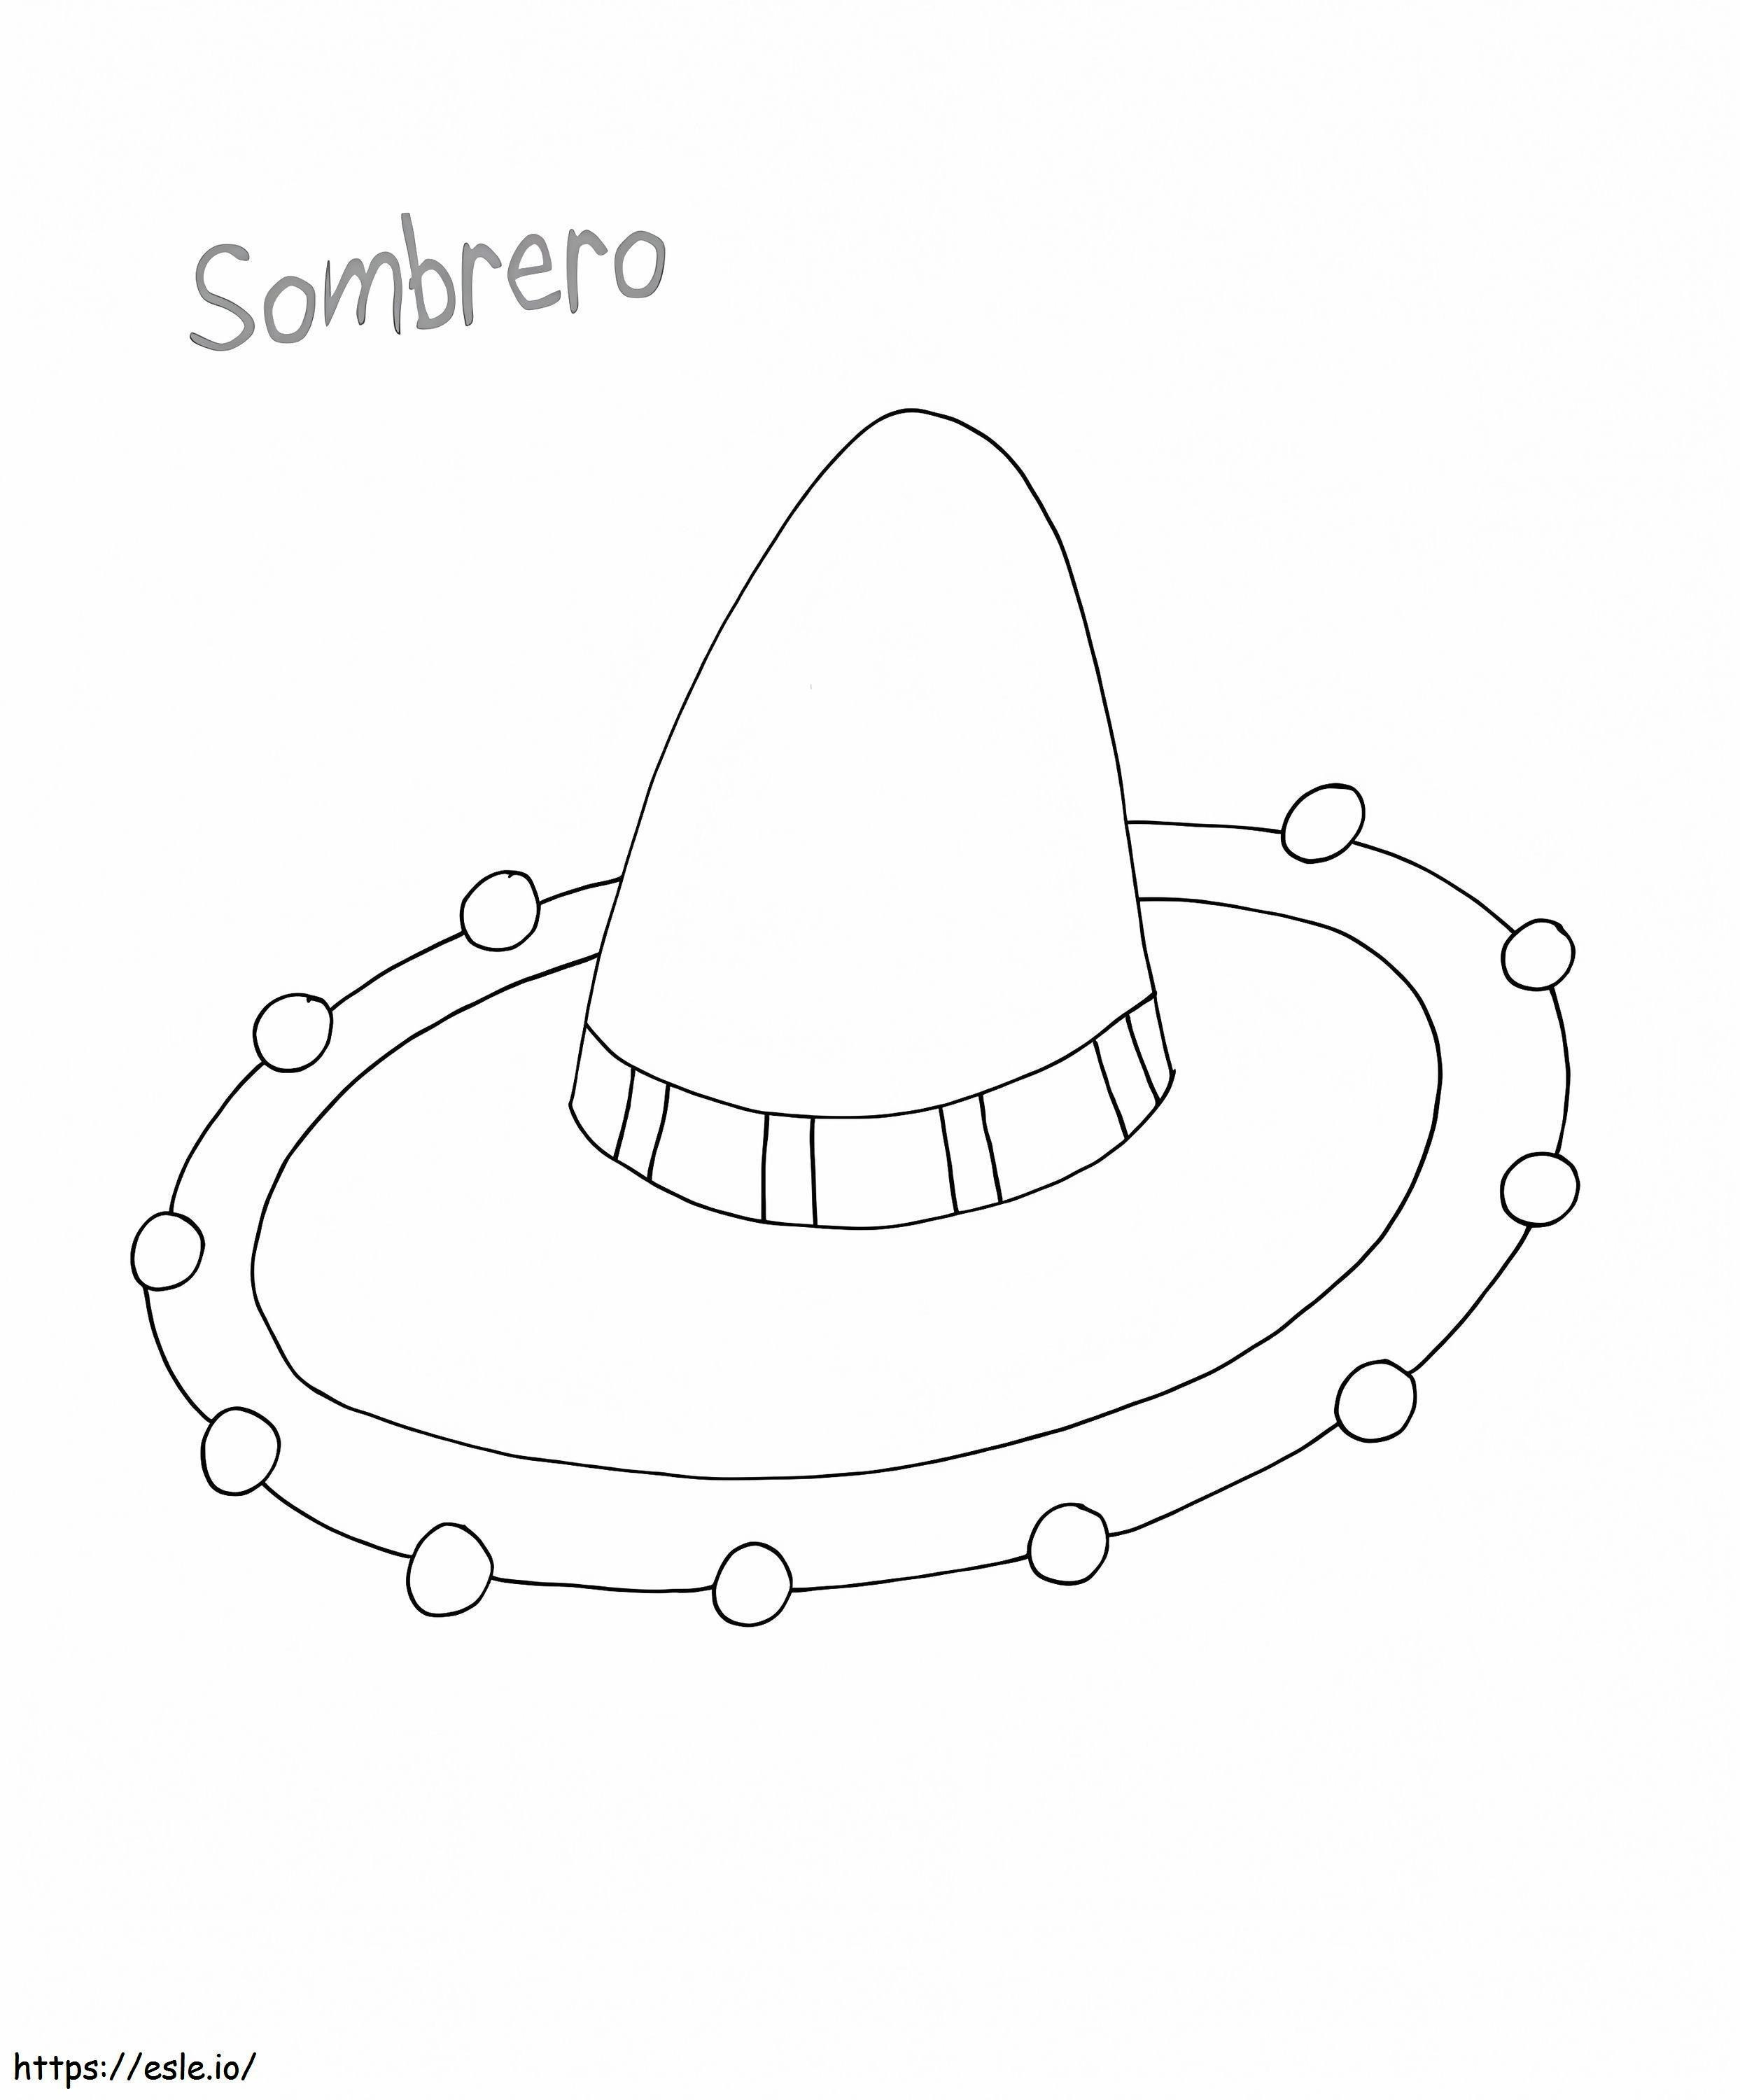 Meksykański kapelusz Sombrero kolorowanka